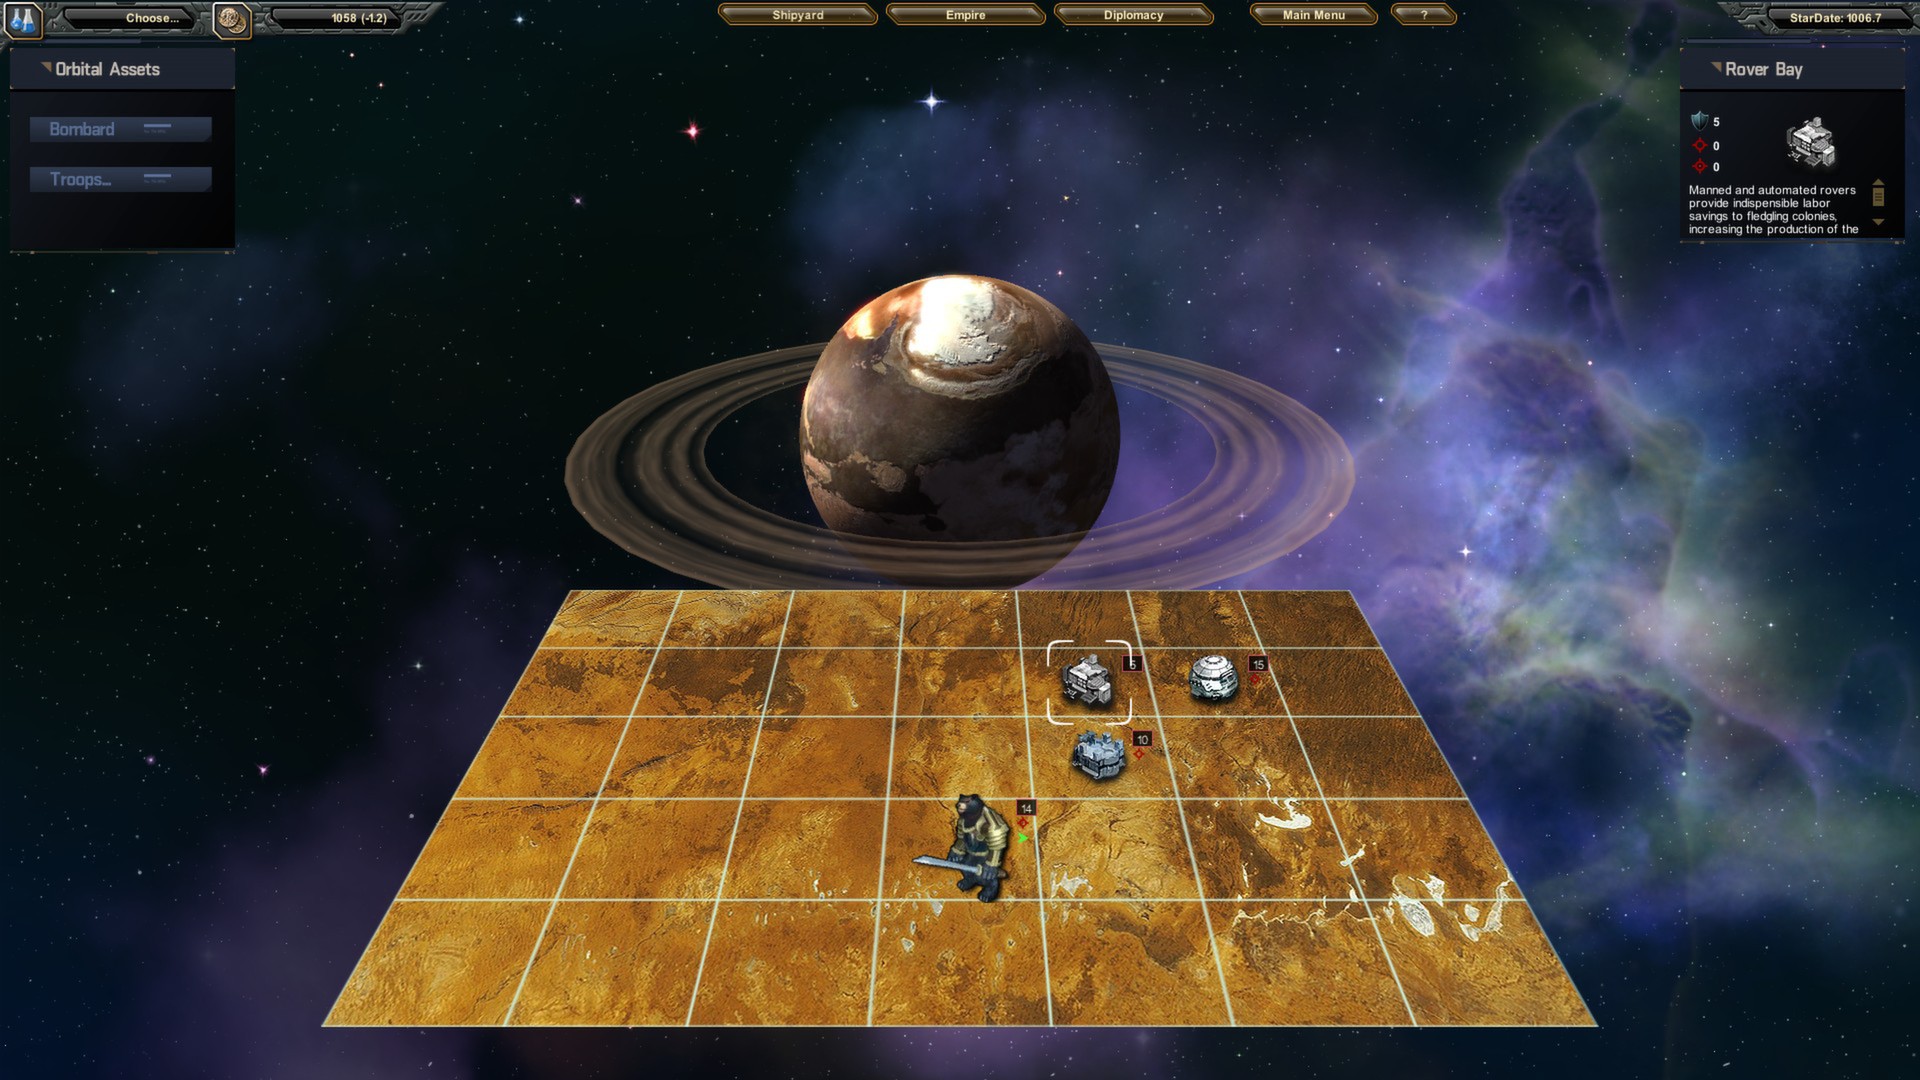 StarDrive: Galactic Odyssey Steam CD Key